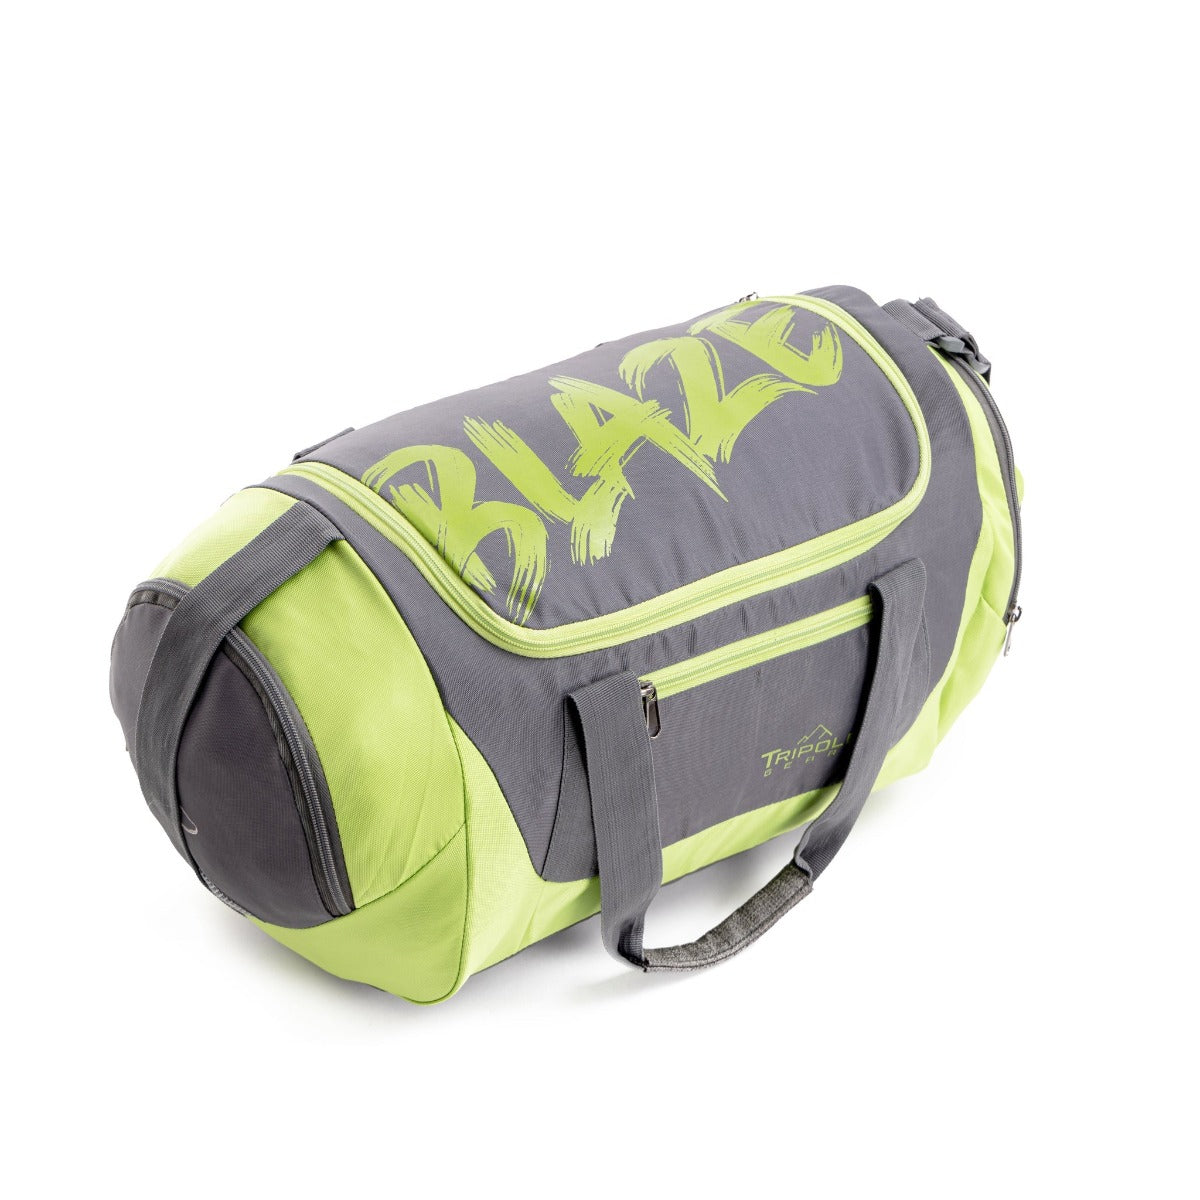 Blaze Gym & Sports Duffel Bag - Grey + Neon Yellow 6